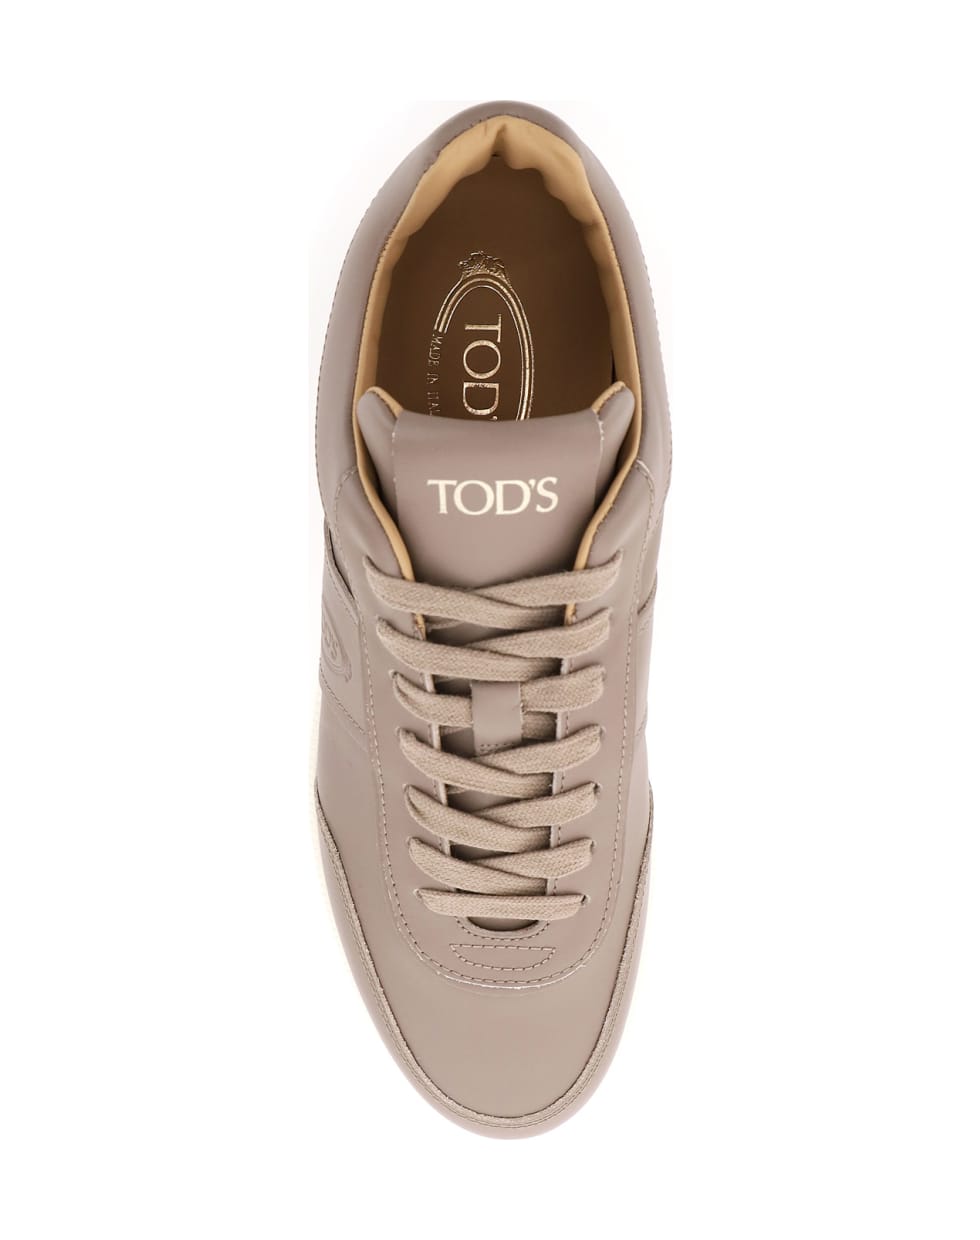 Tod's Tabs Leather Sneakers - TORTORA MEDIO (Grey)